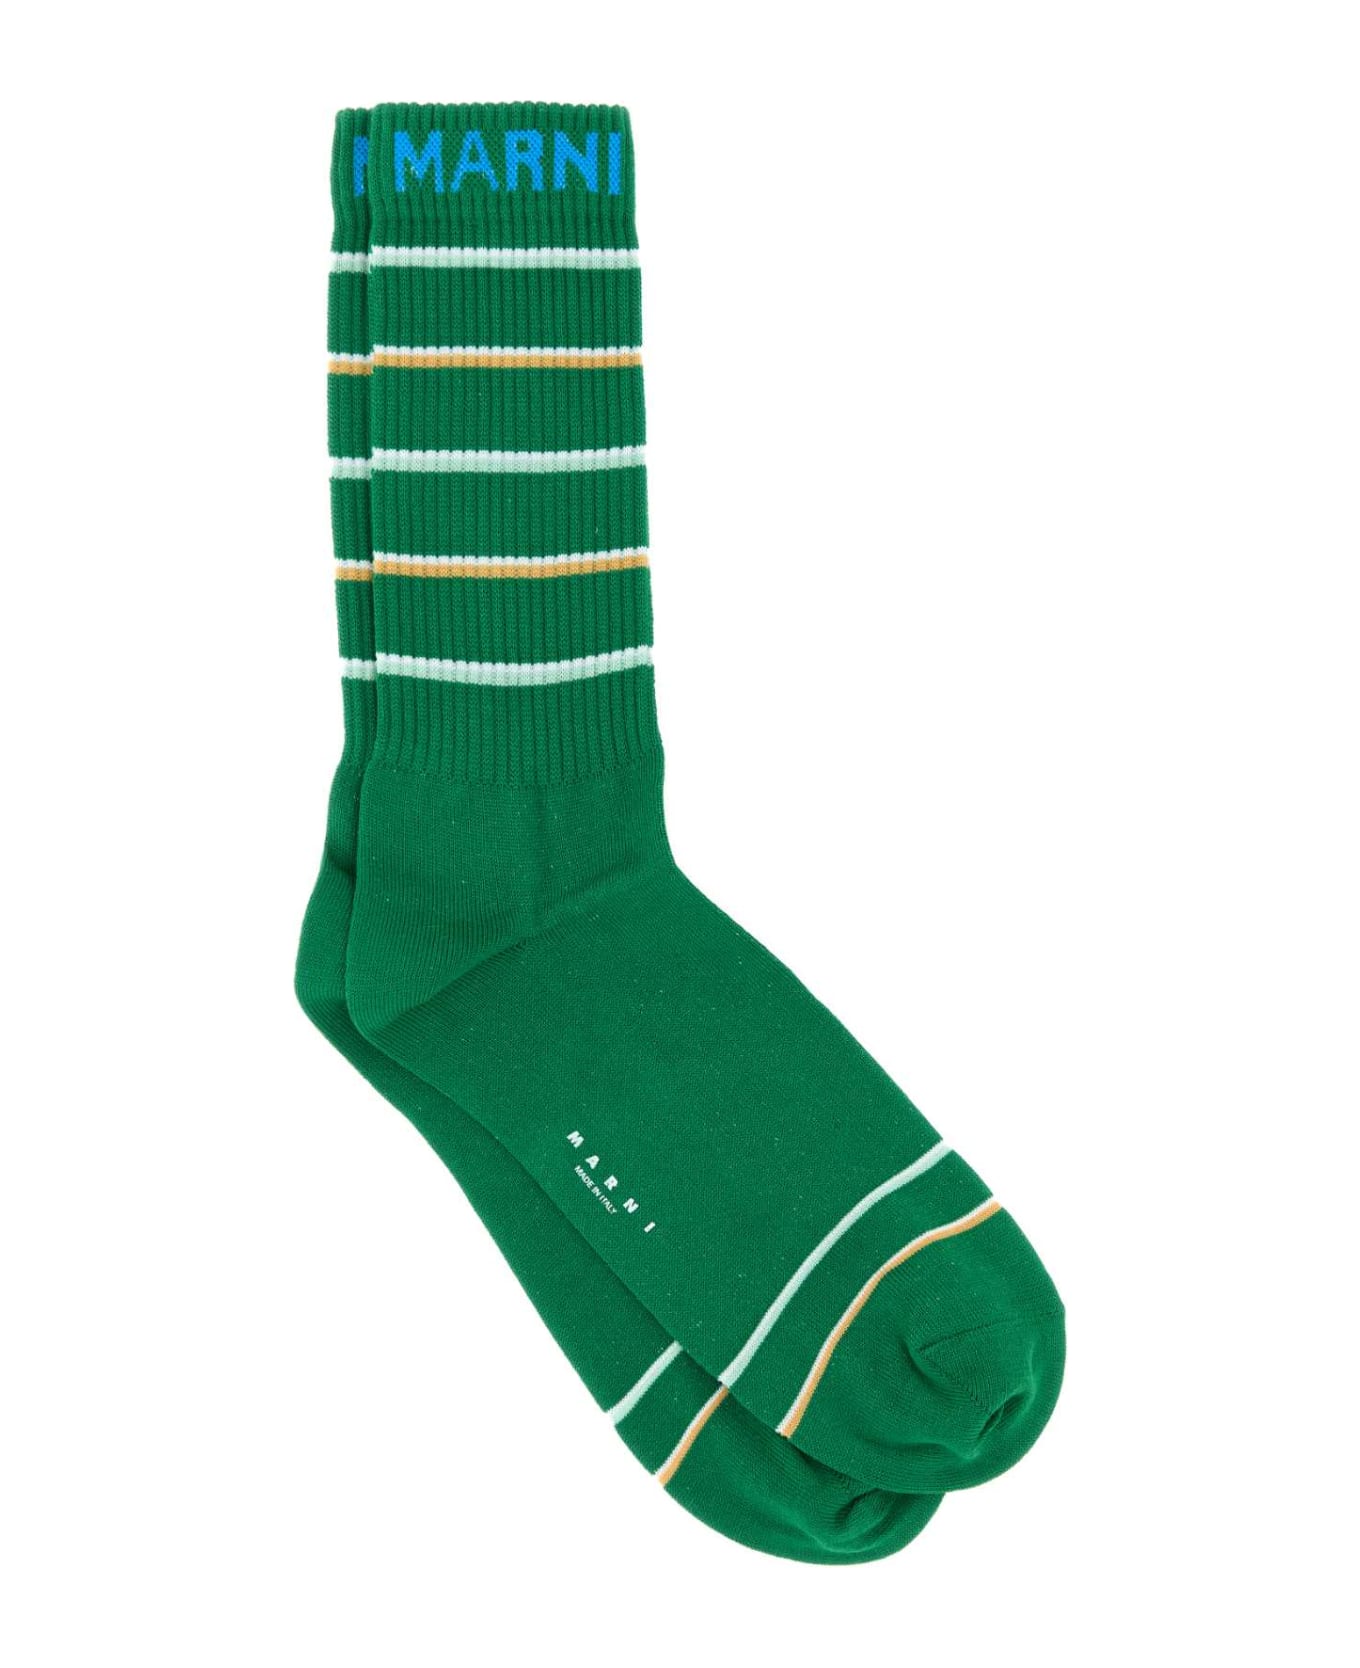 Marni Green Cotton Blend Socks - SEAGREEN